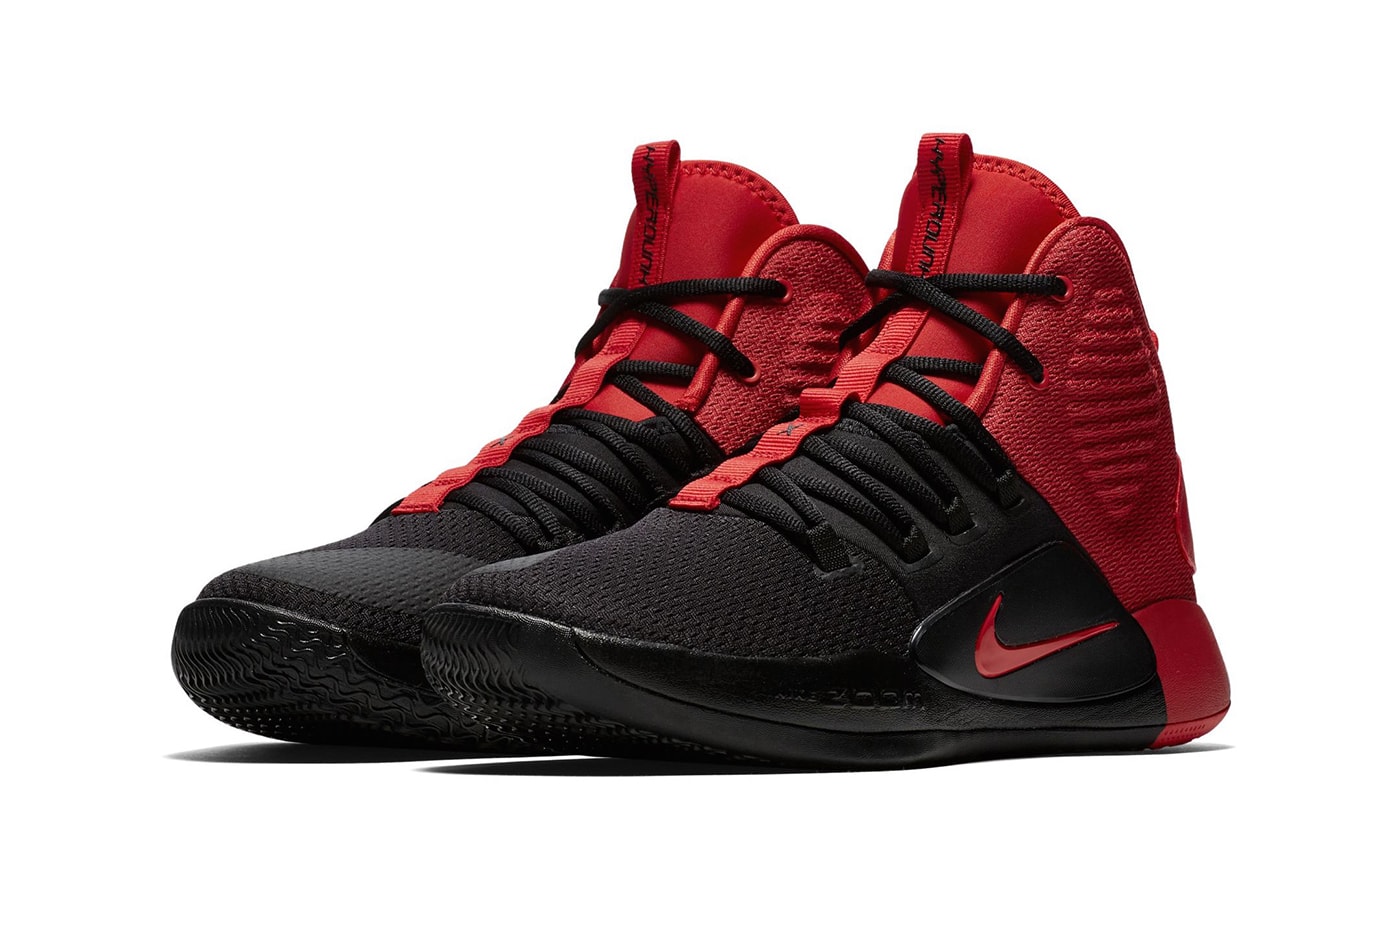 Nike Hyperdunk X Black Red summer 2018 release sneakers footwear